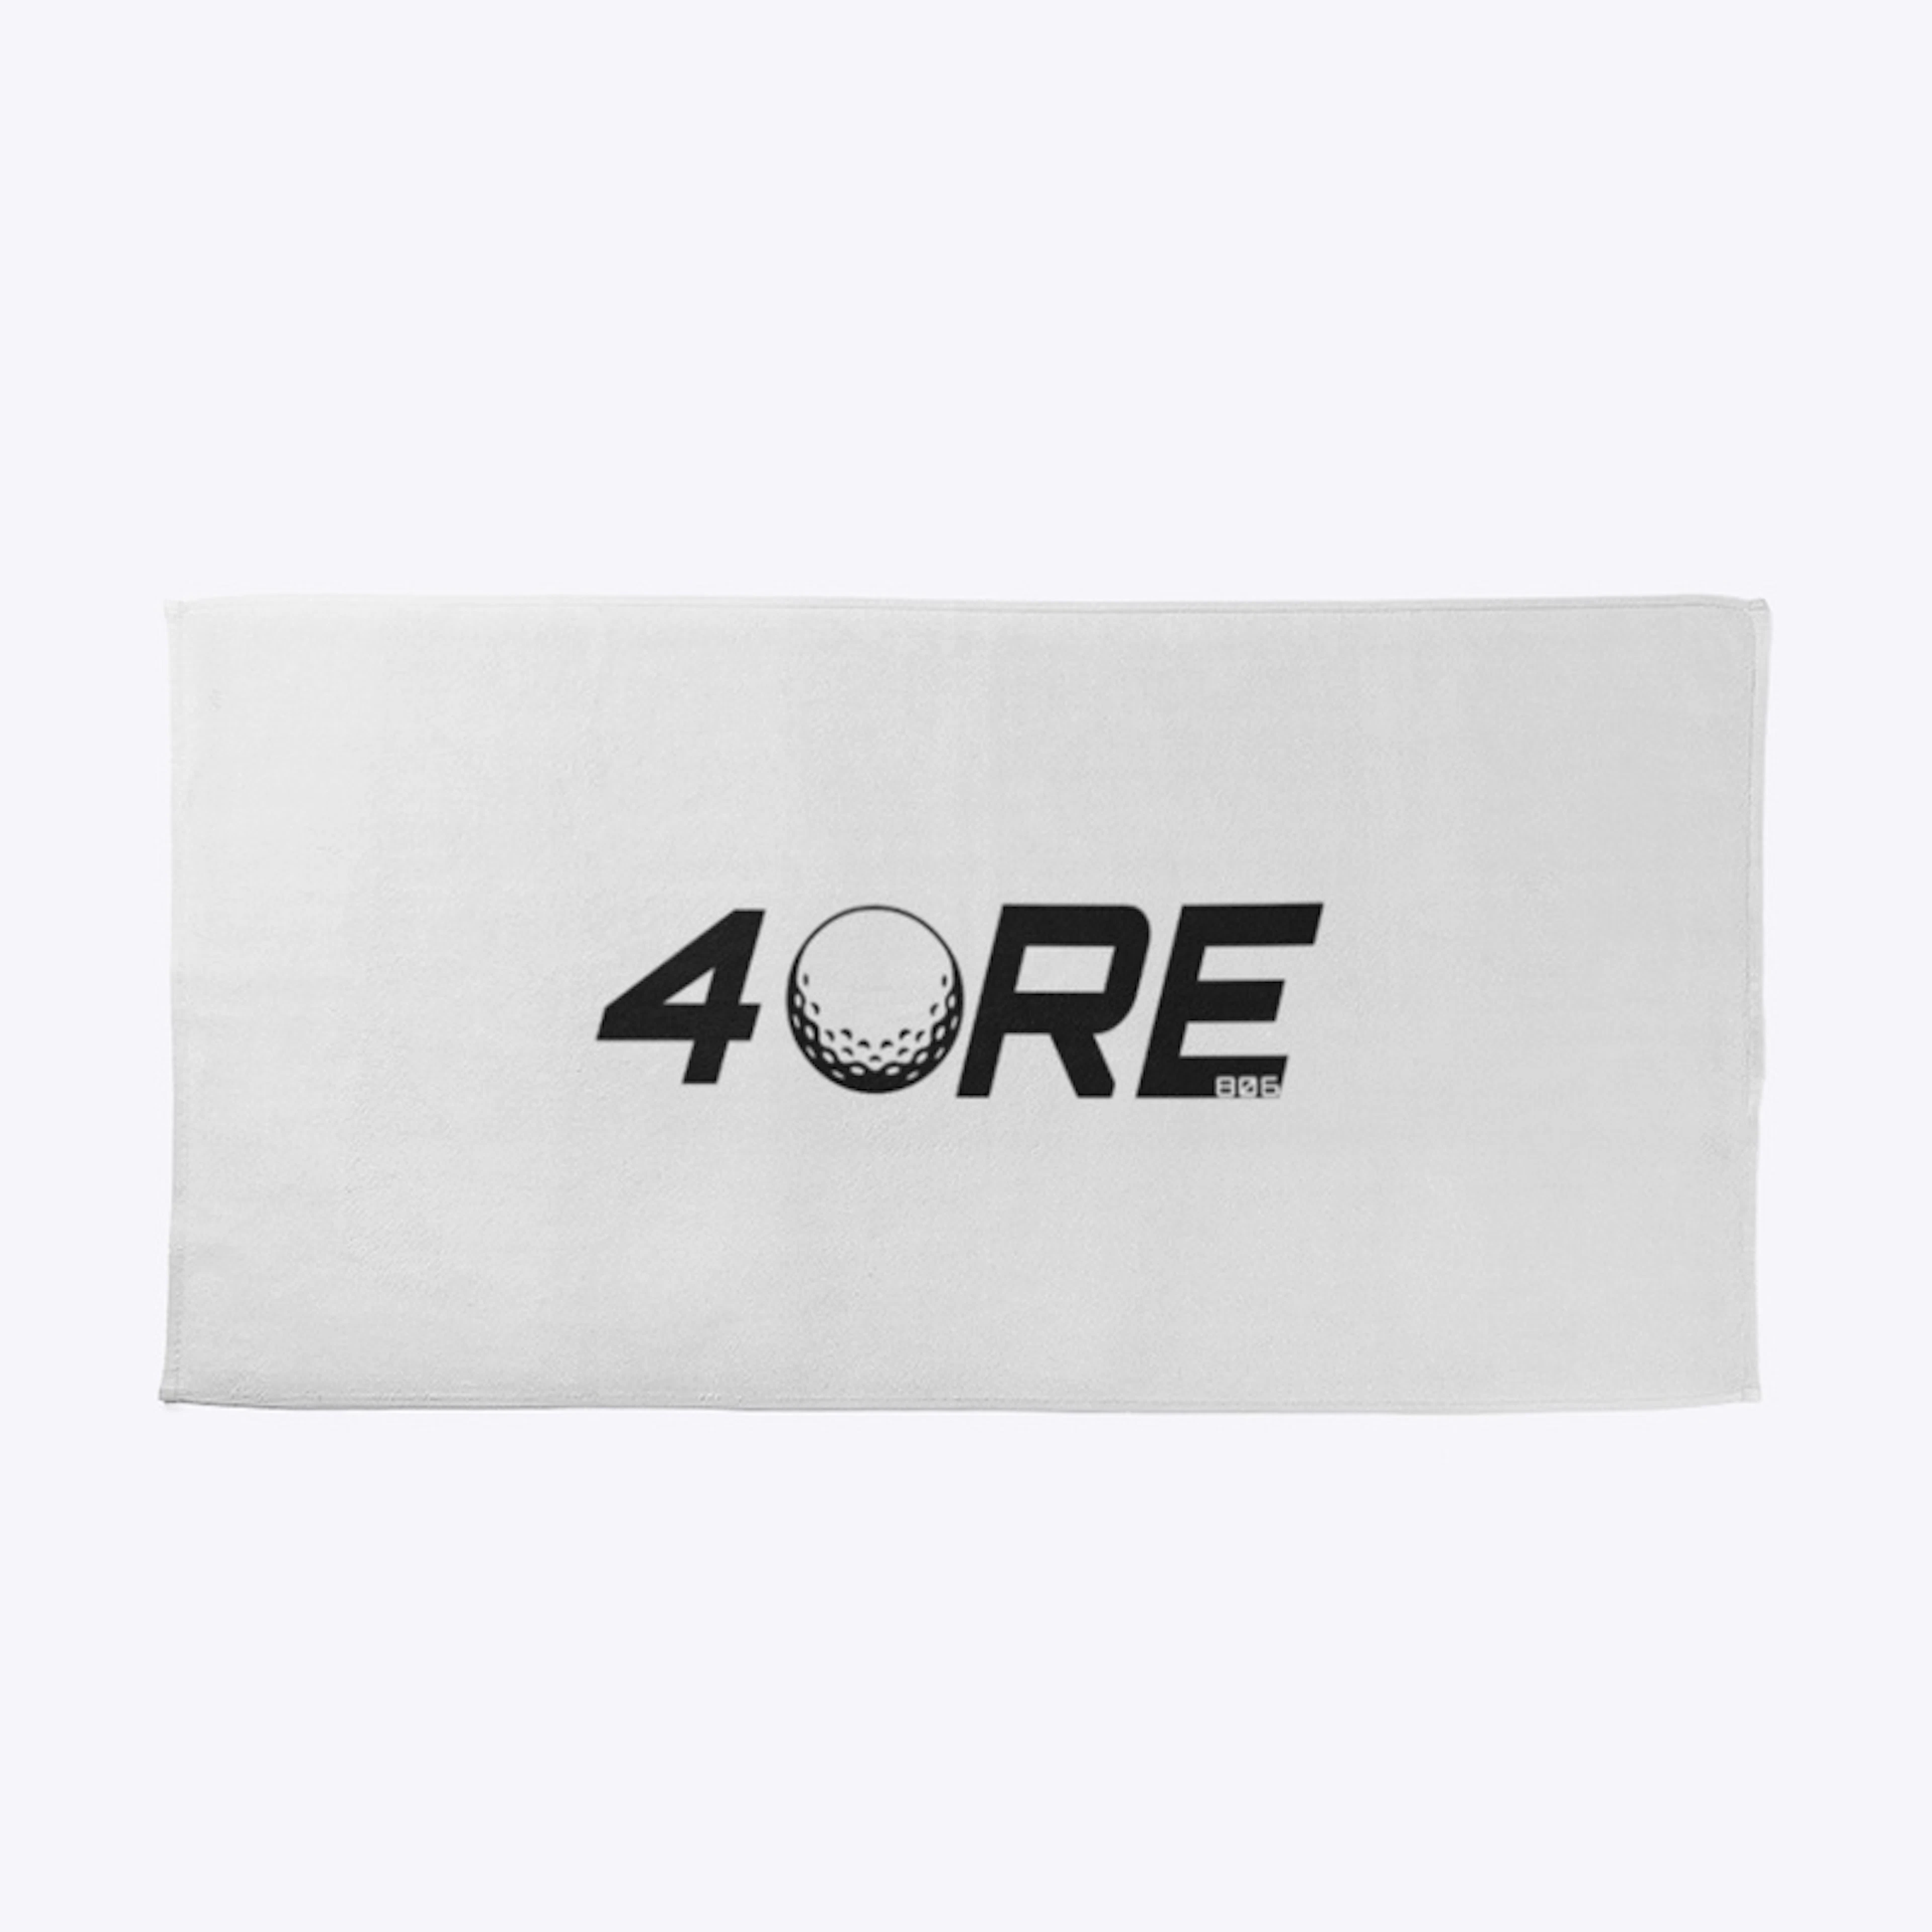 4ORE towel